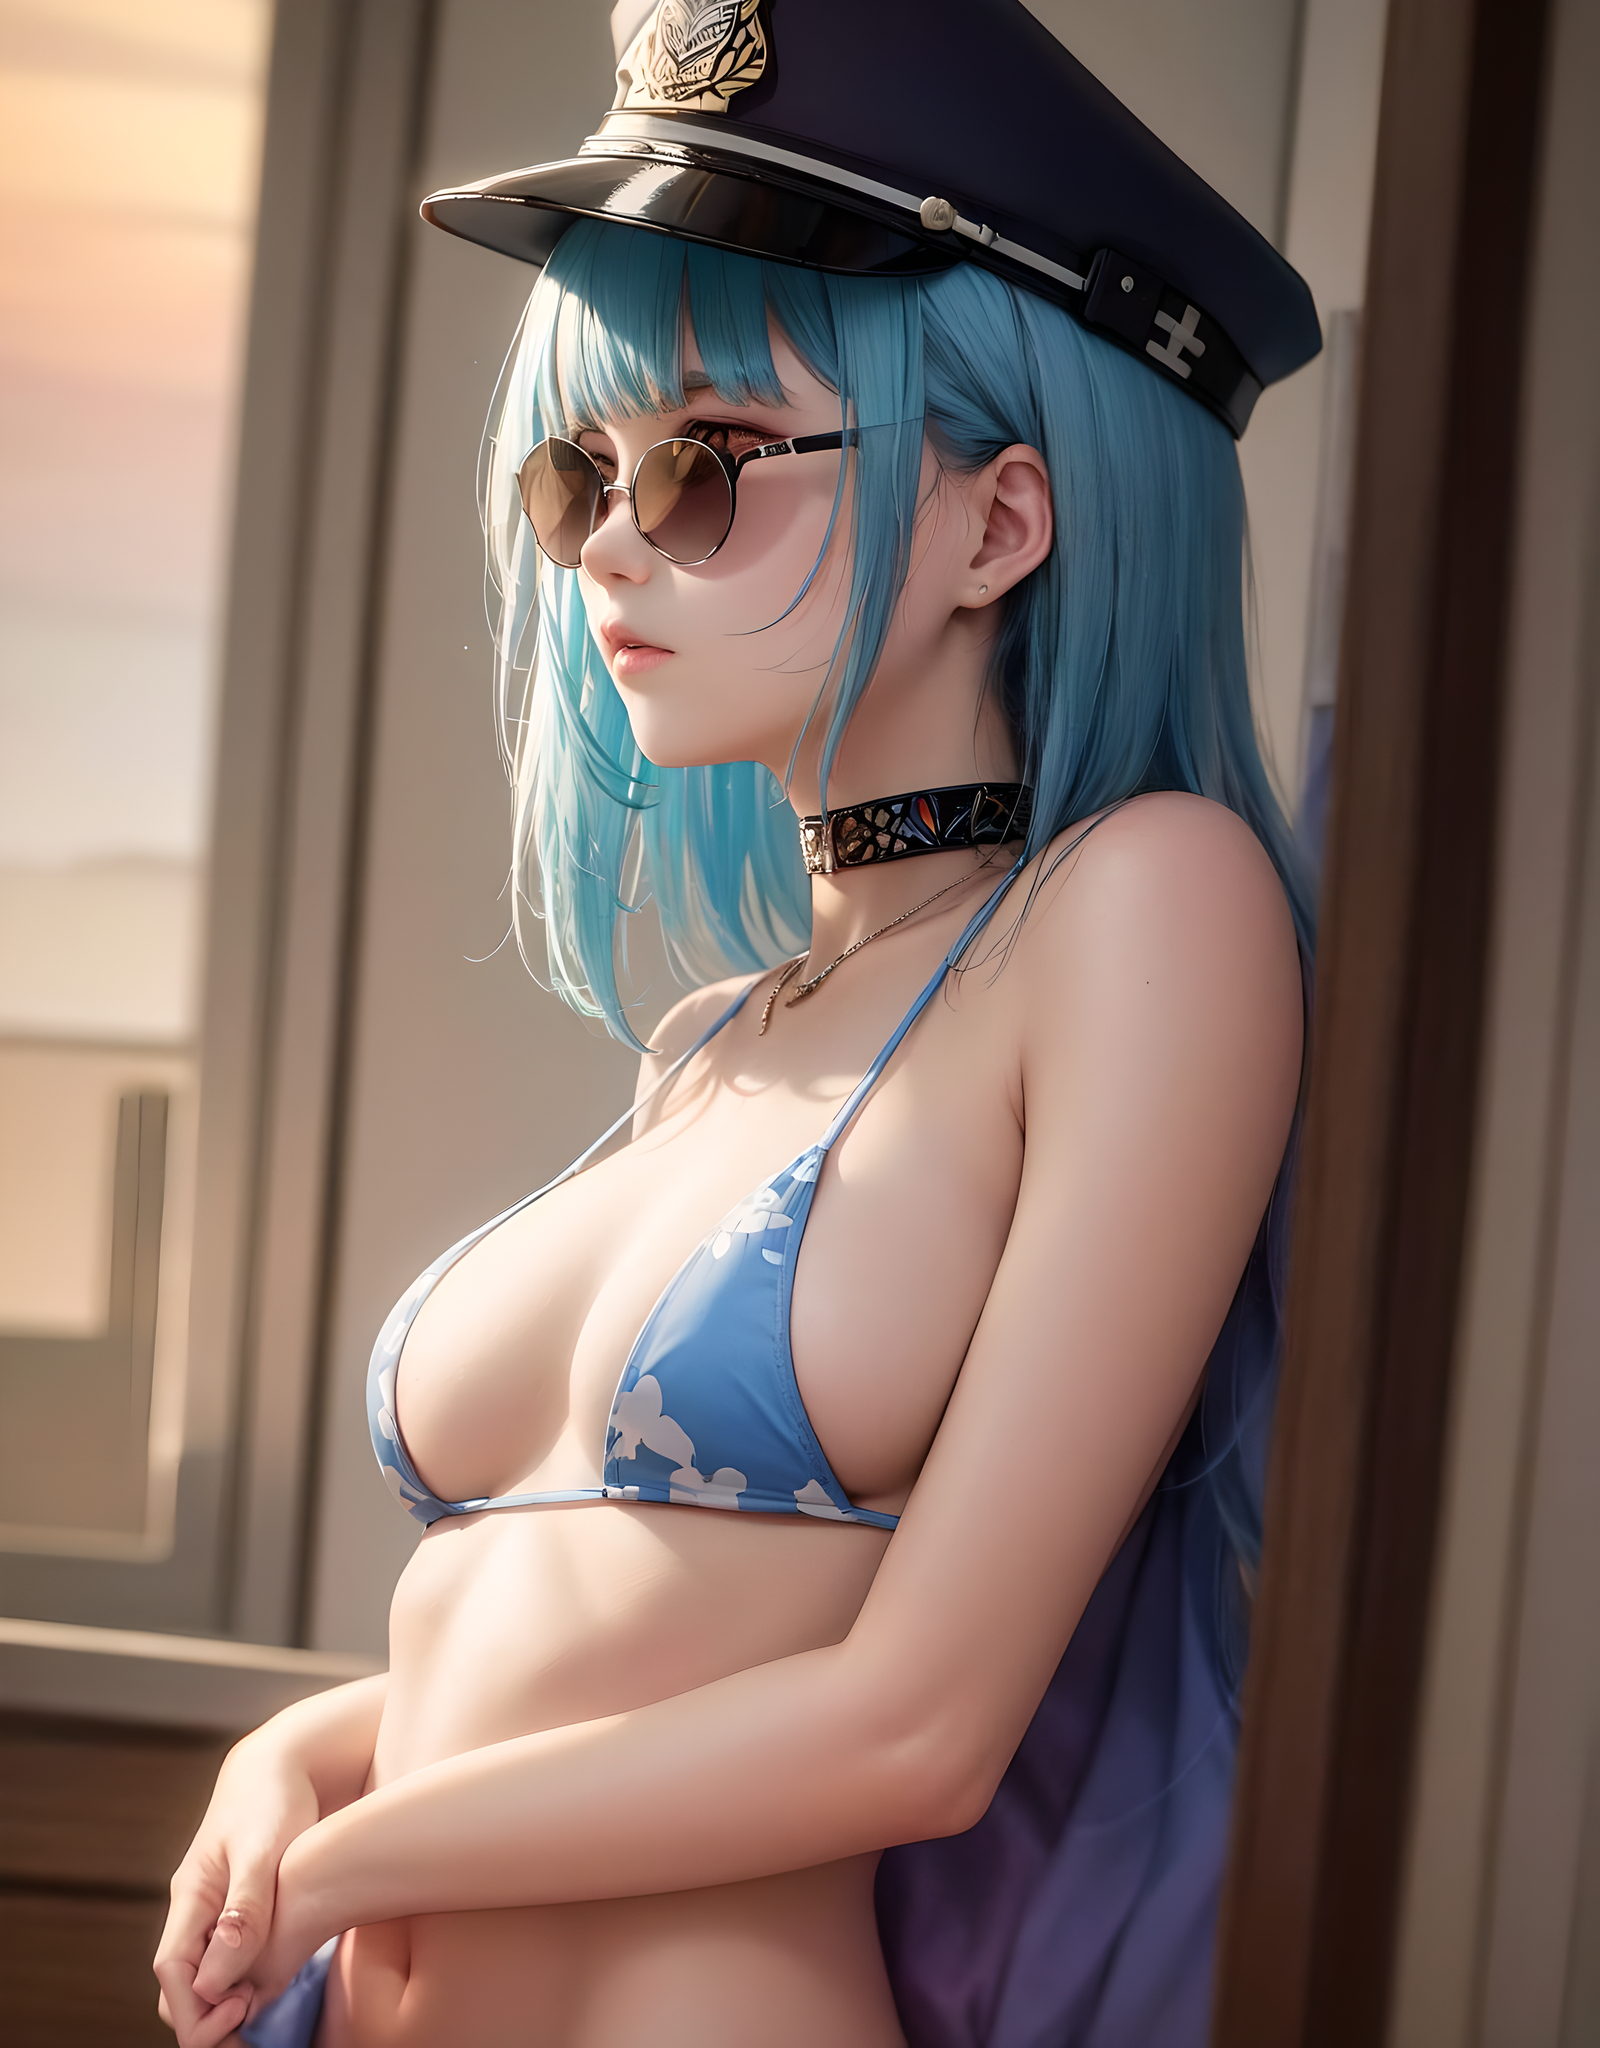 Anime 1600x2048 police hat blue hair FluffyMammoth portrait display hat sunglasses bikini top small boobs women choker Asian short hair necklace AI art